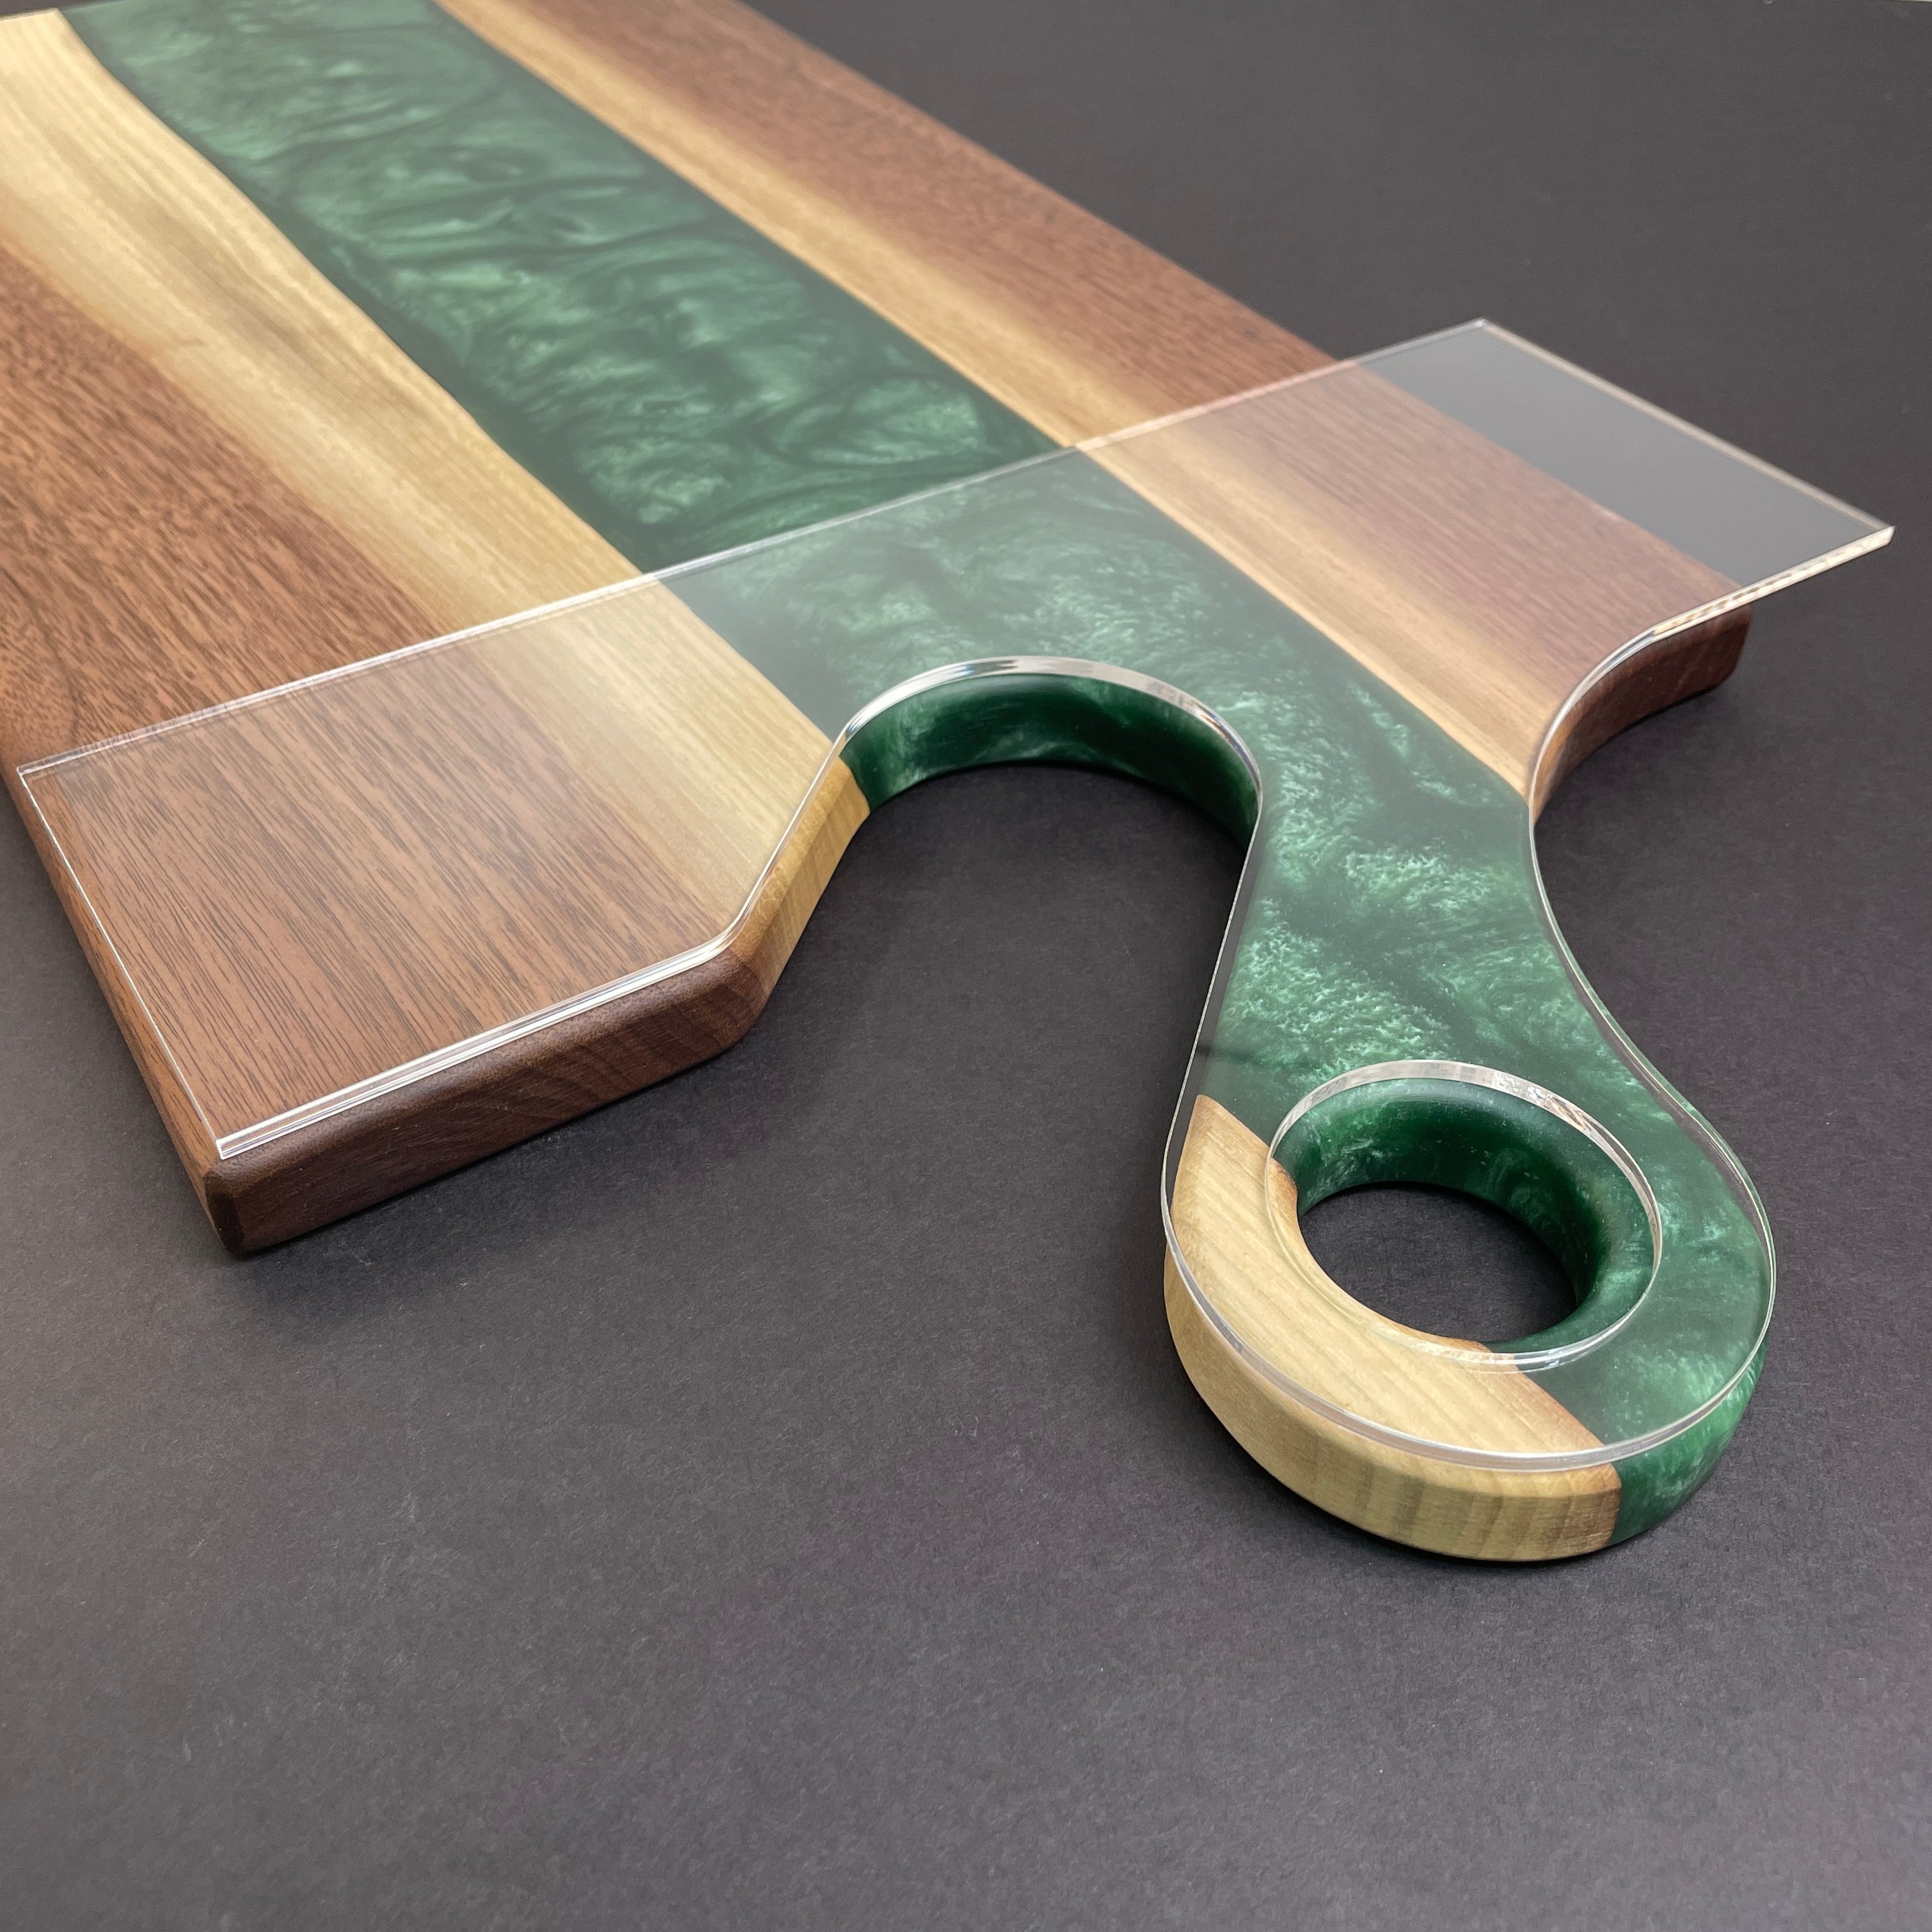 cutting-board-handle-template